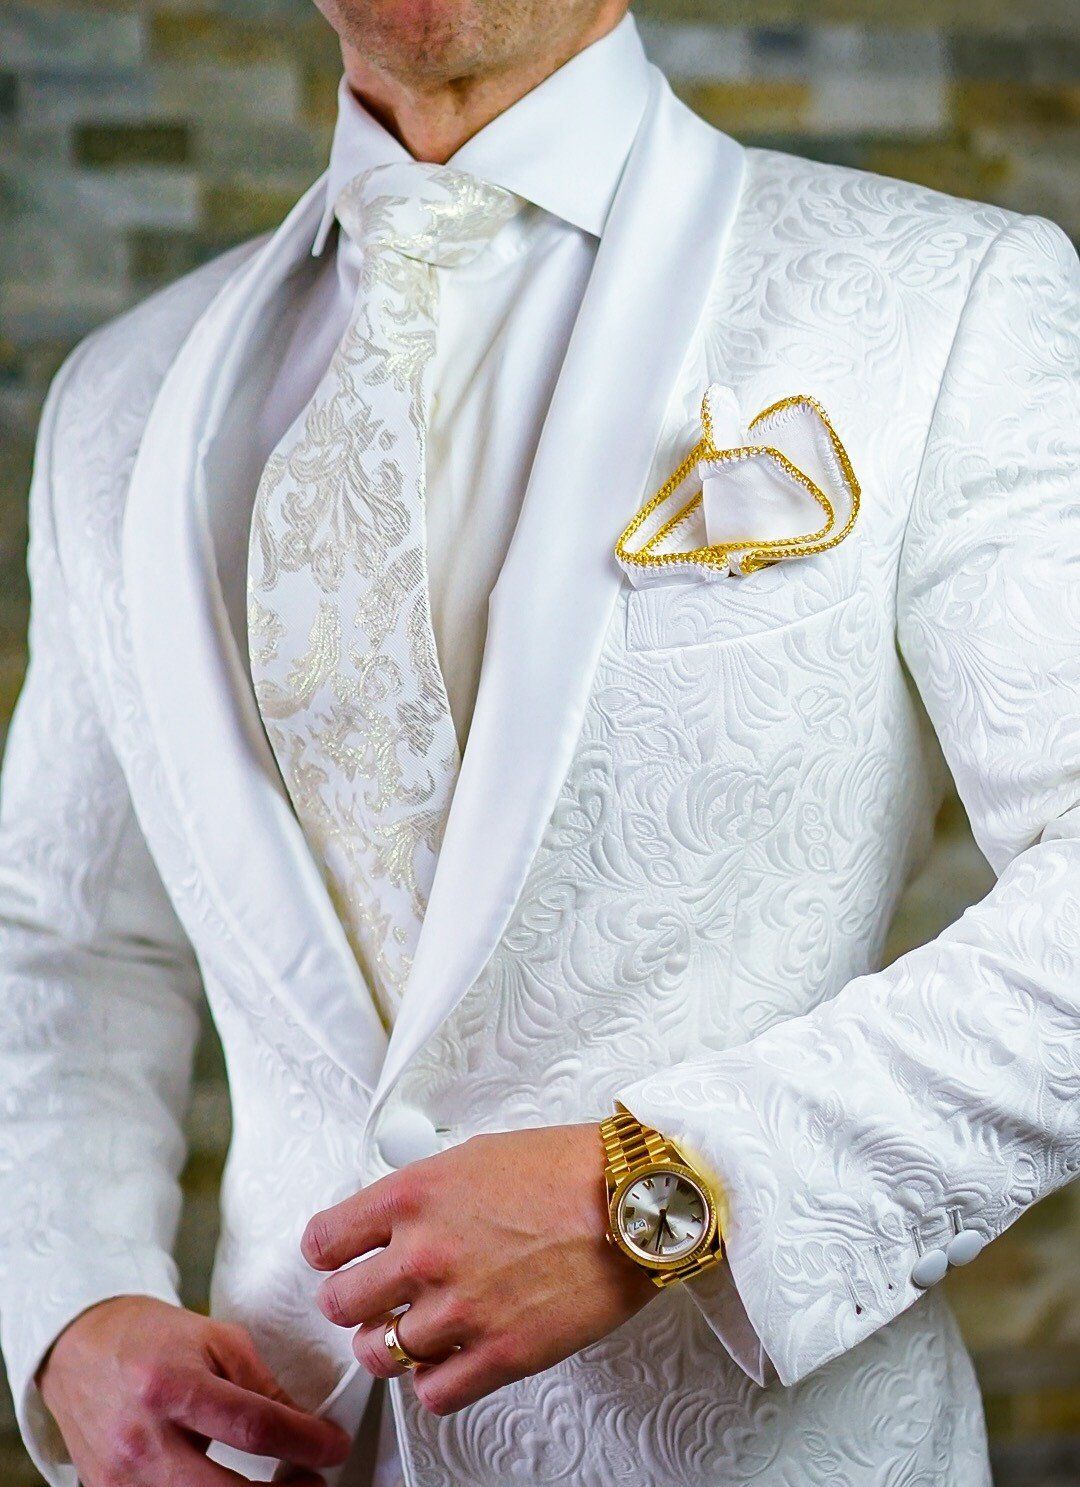 Venetian Damascato Luxury Necktie